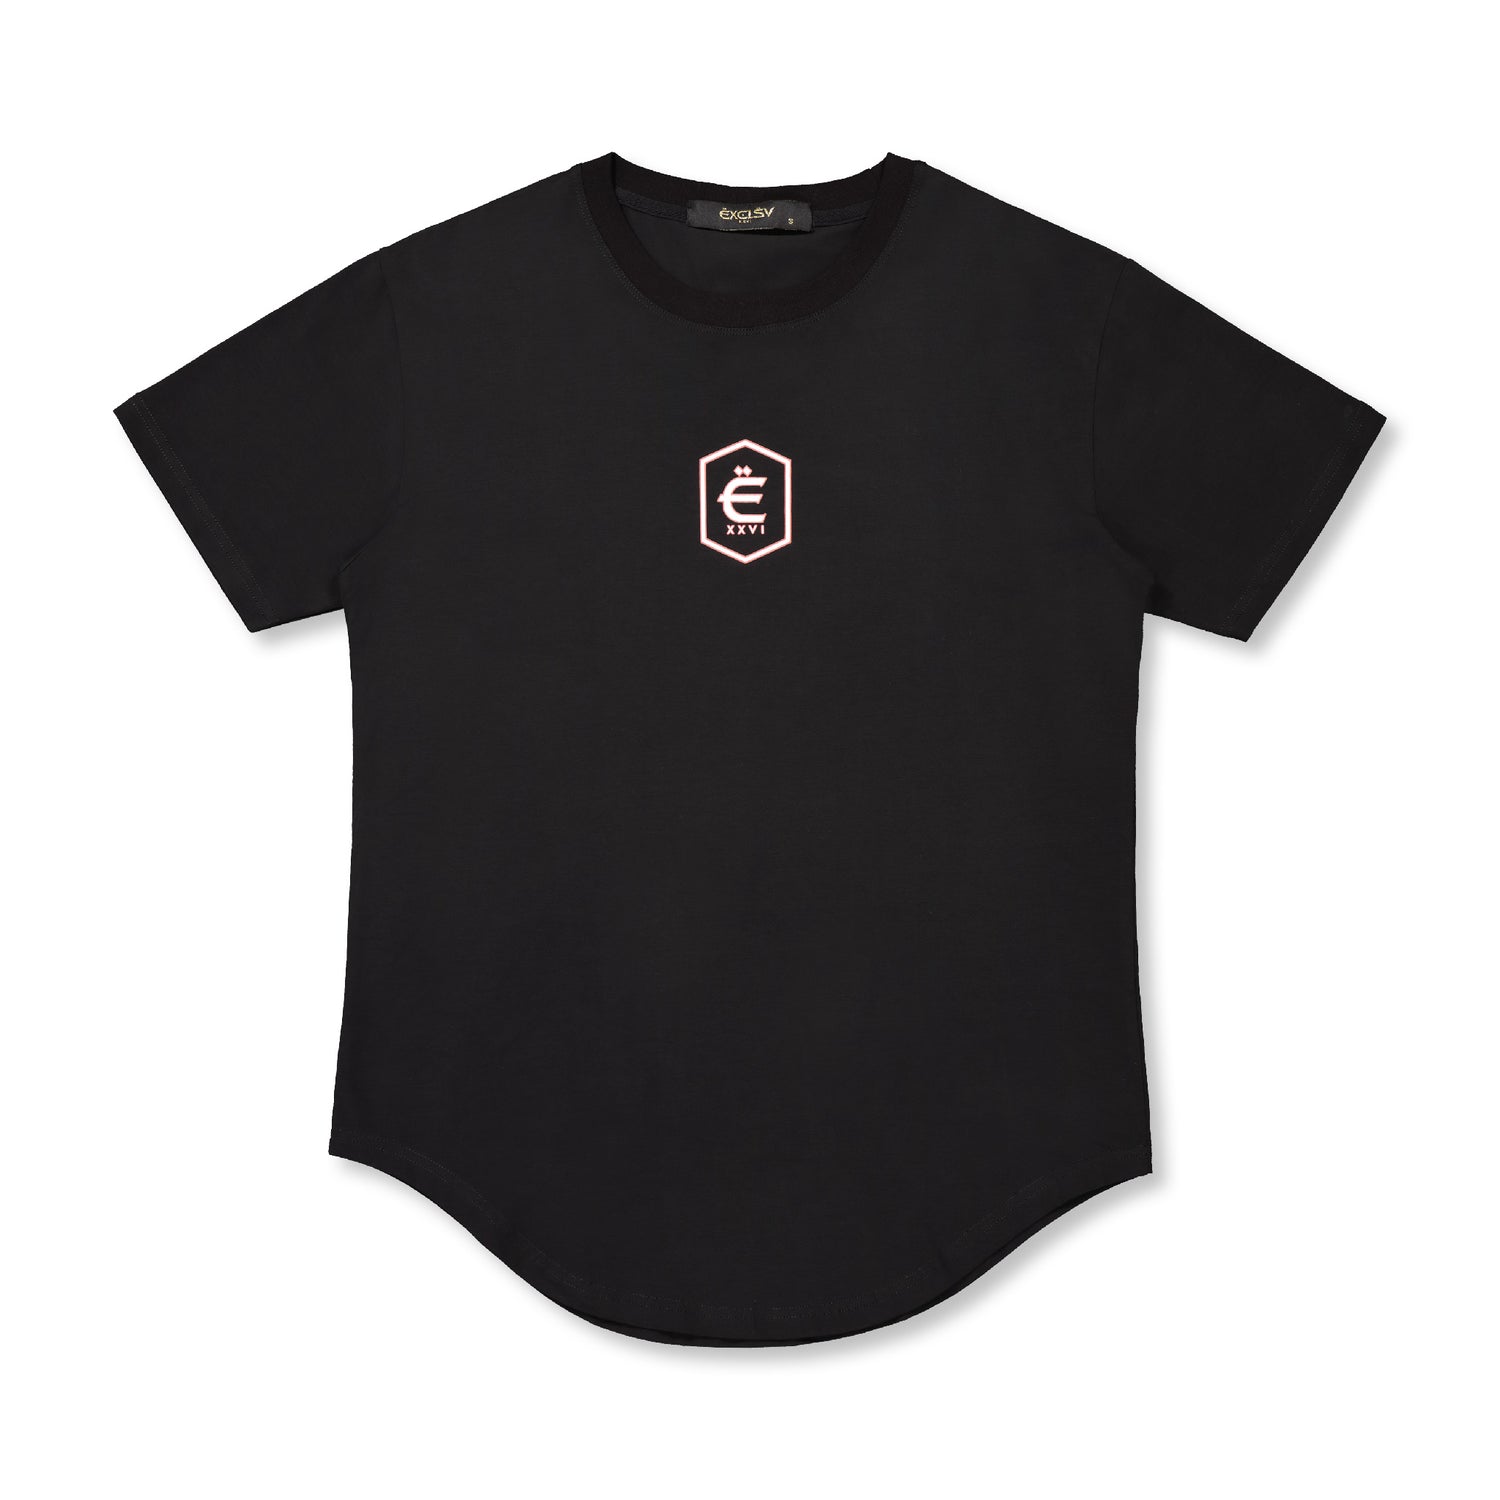 Black Oversized T-Shirt - EXCLSV XXVI